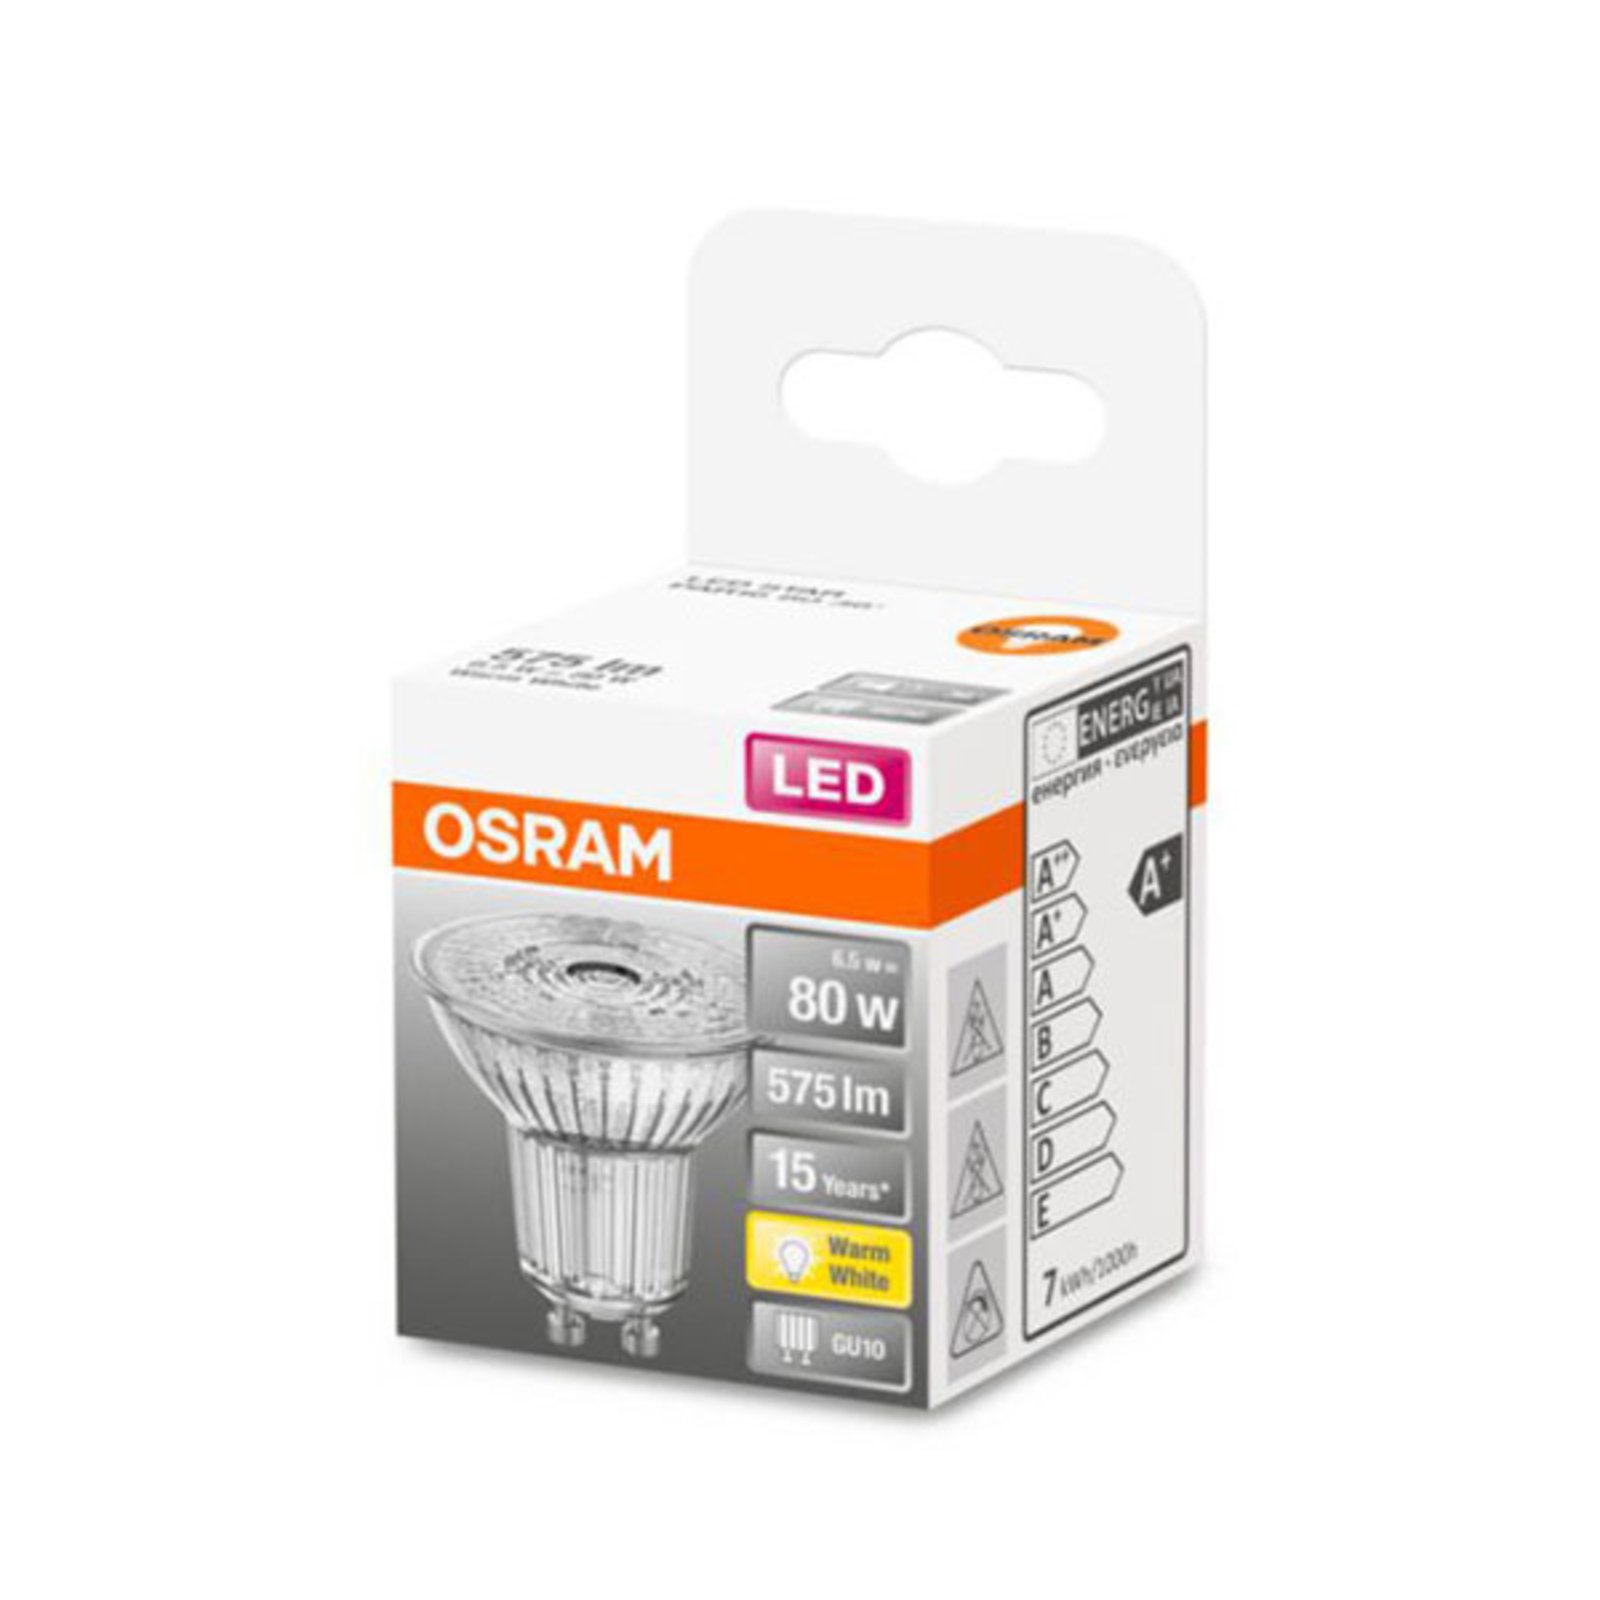 6 x OSRAM LED Downlight Globes Bulbs Lamps 7W 240V GU10 Cool Daylight 575Lm 